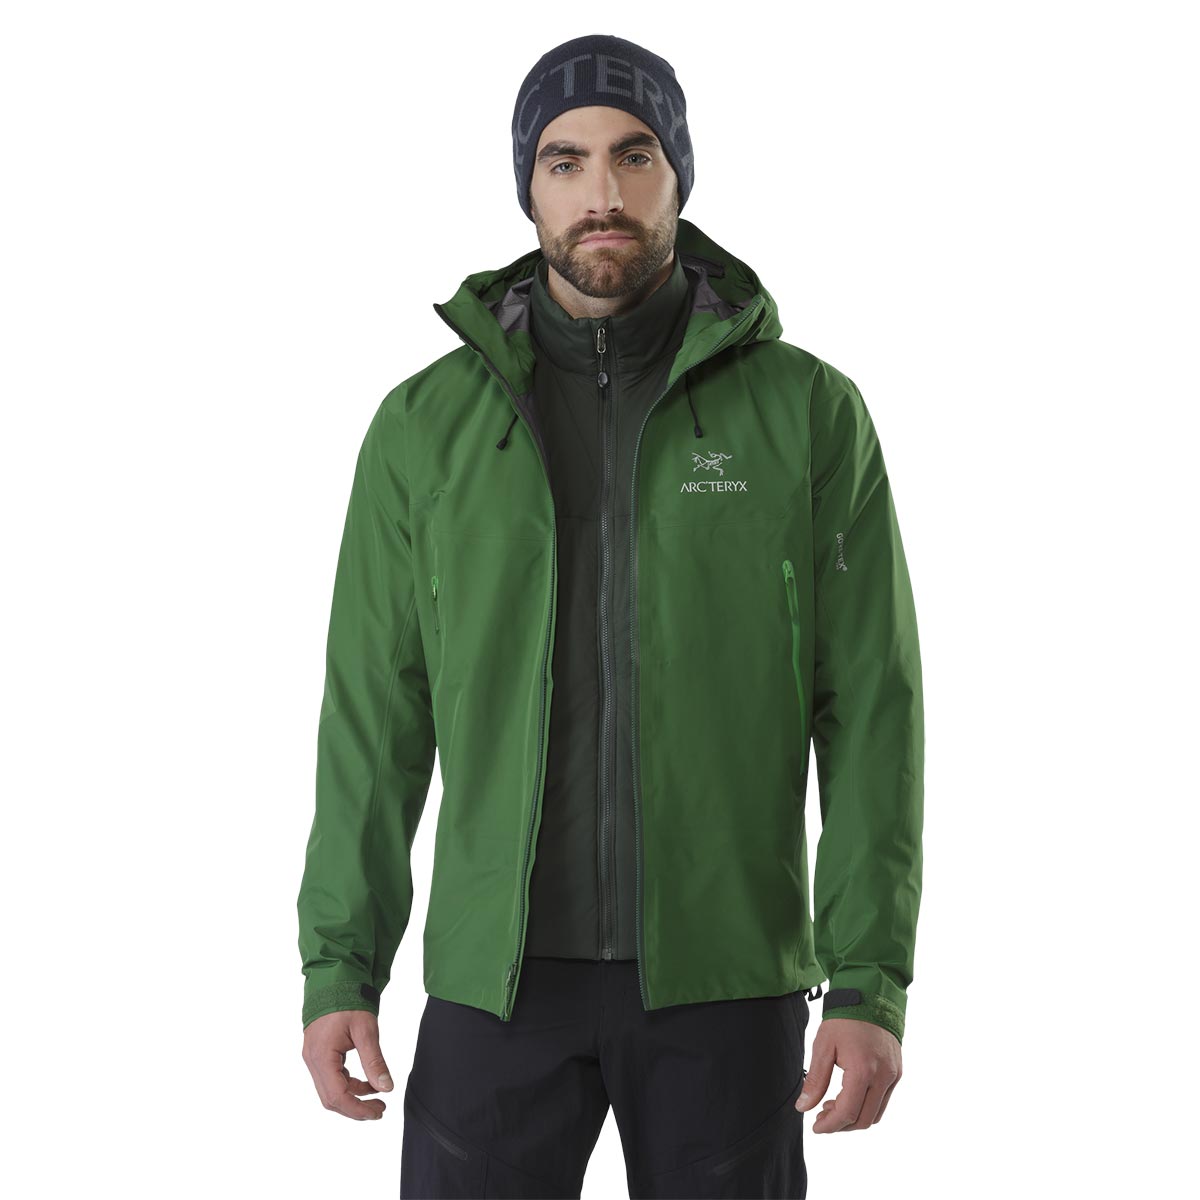 Arc'teryx Atom LT Jacket, men's, discontinued Fall 2018 colors (free ...